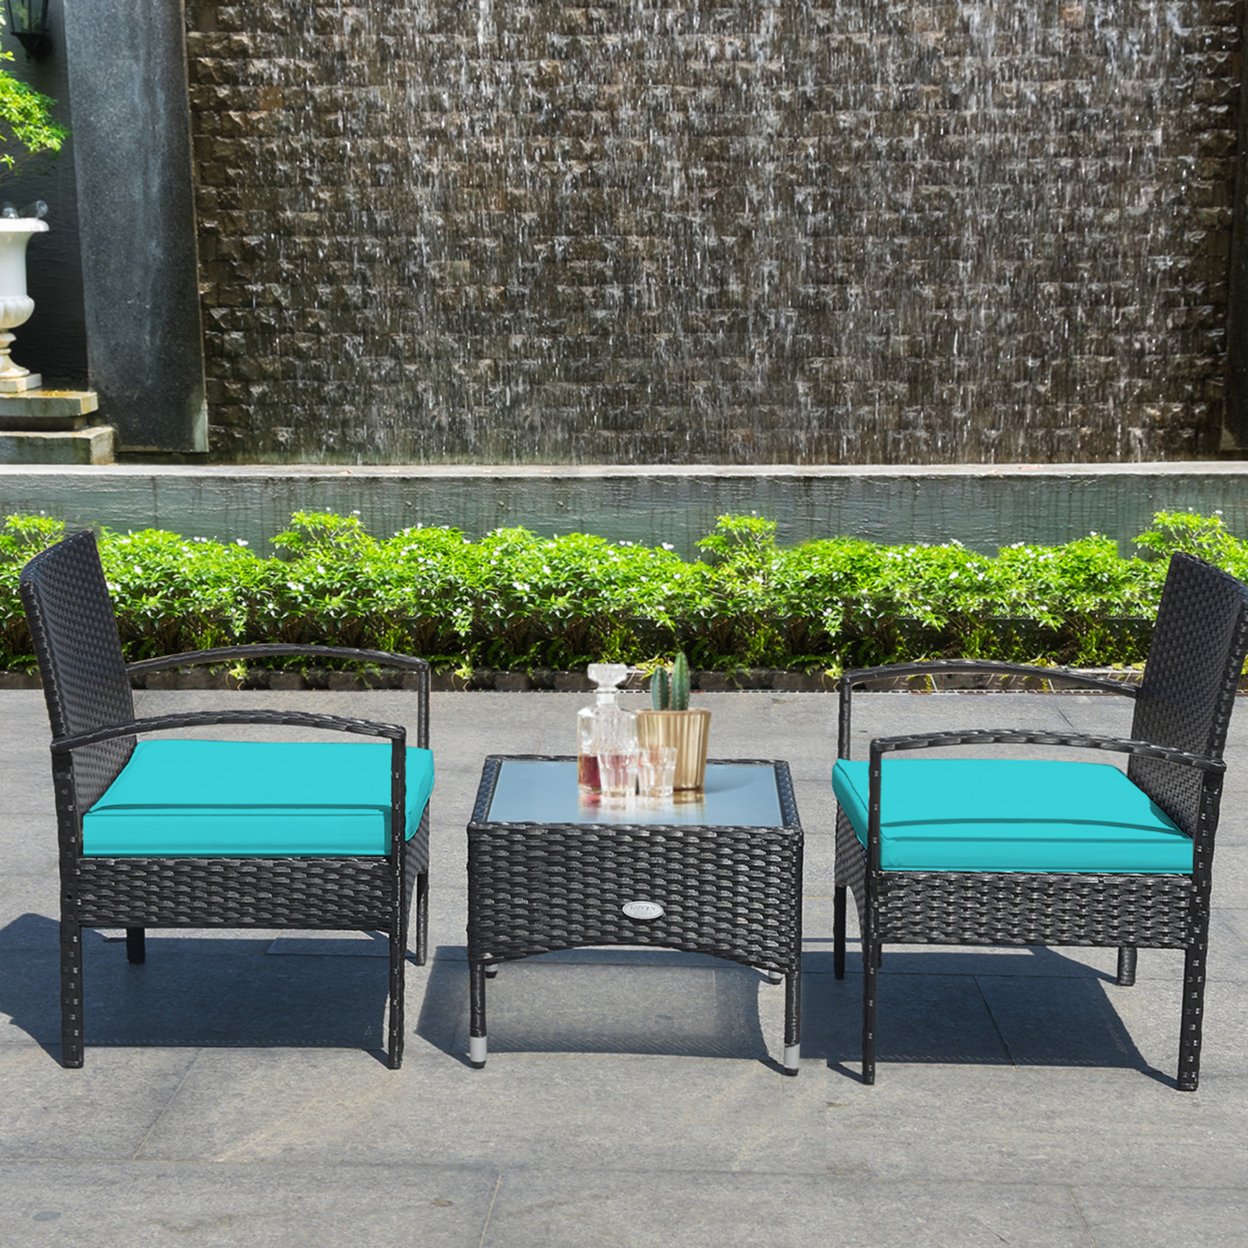 3 PCS Patio Wicker Rattan Furniture Set Coffee Table & 2 Rattan Chair W/ Cushion Turquoise